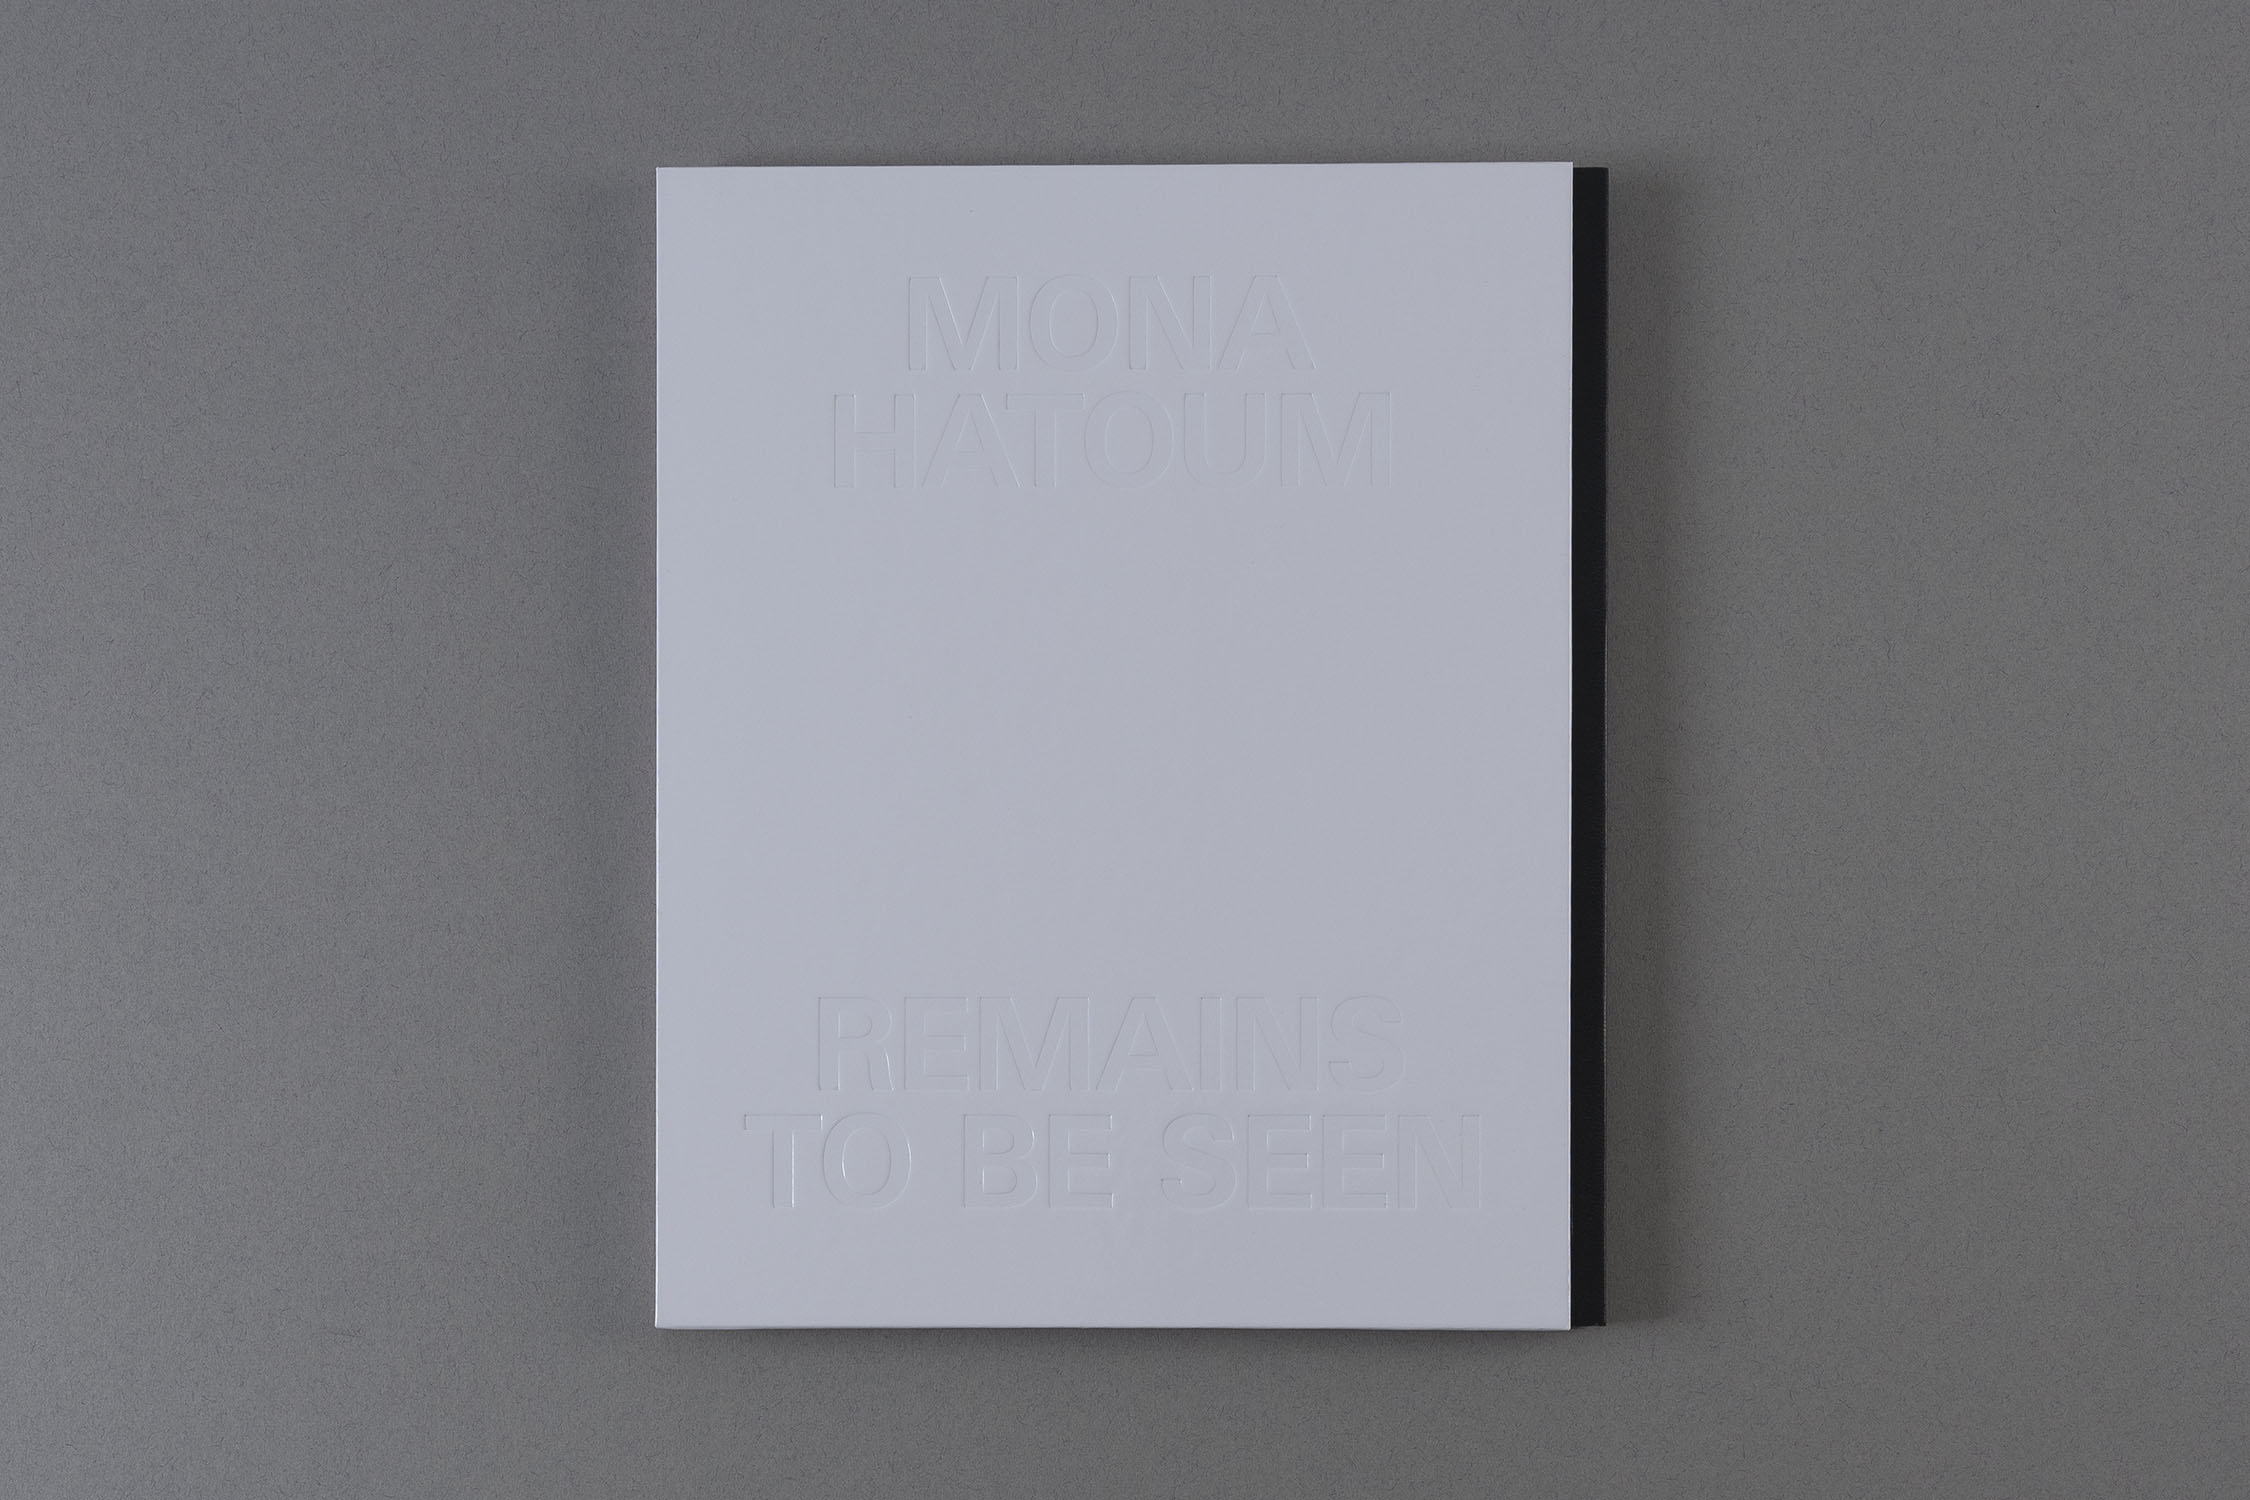 Mona Hatoum ‘Remains To Be Seen’ (2019)